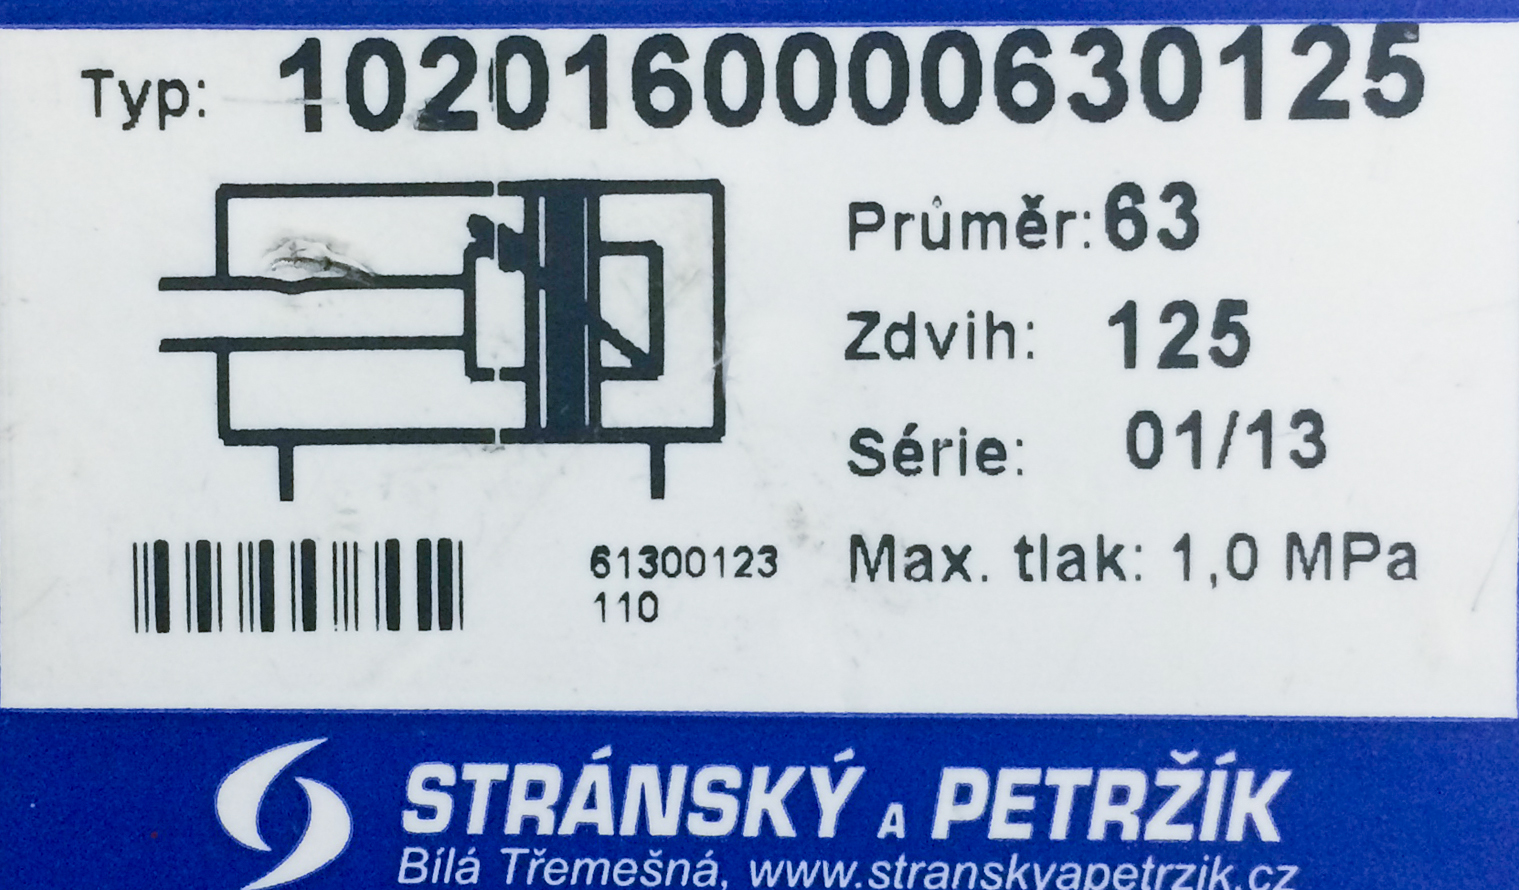 Пневмоцилиндр Type 102016000063012 5 (Чехия)